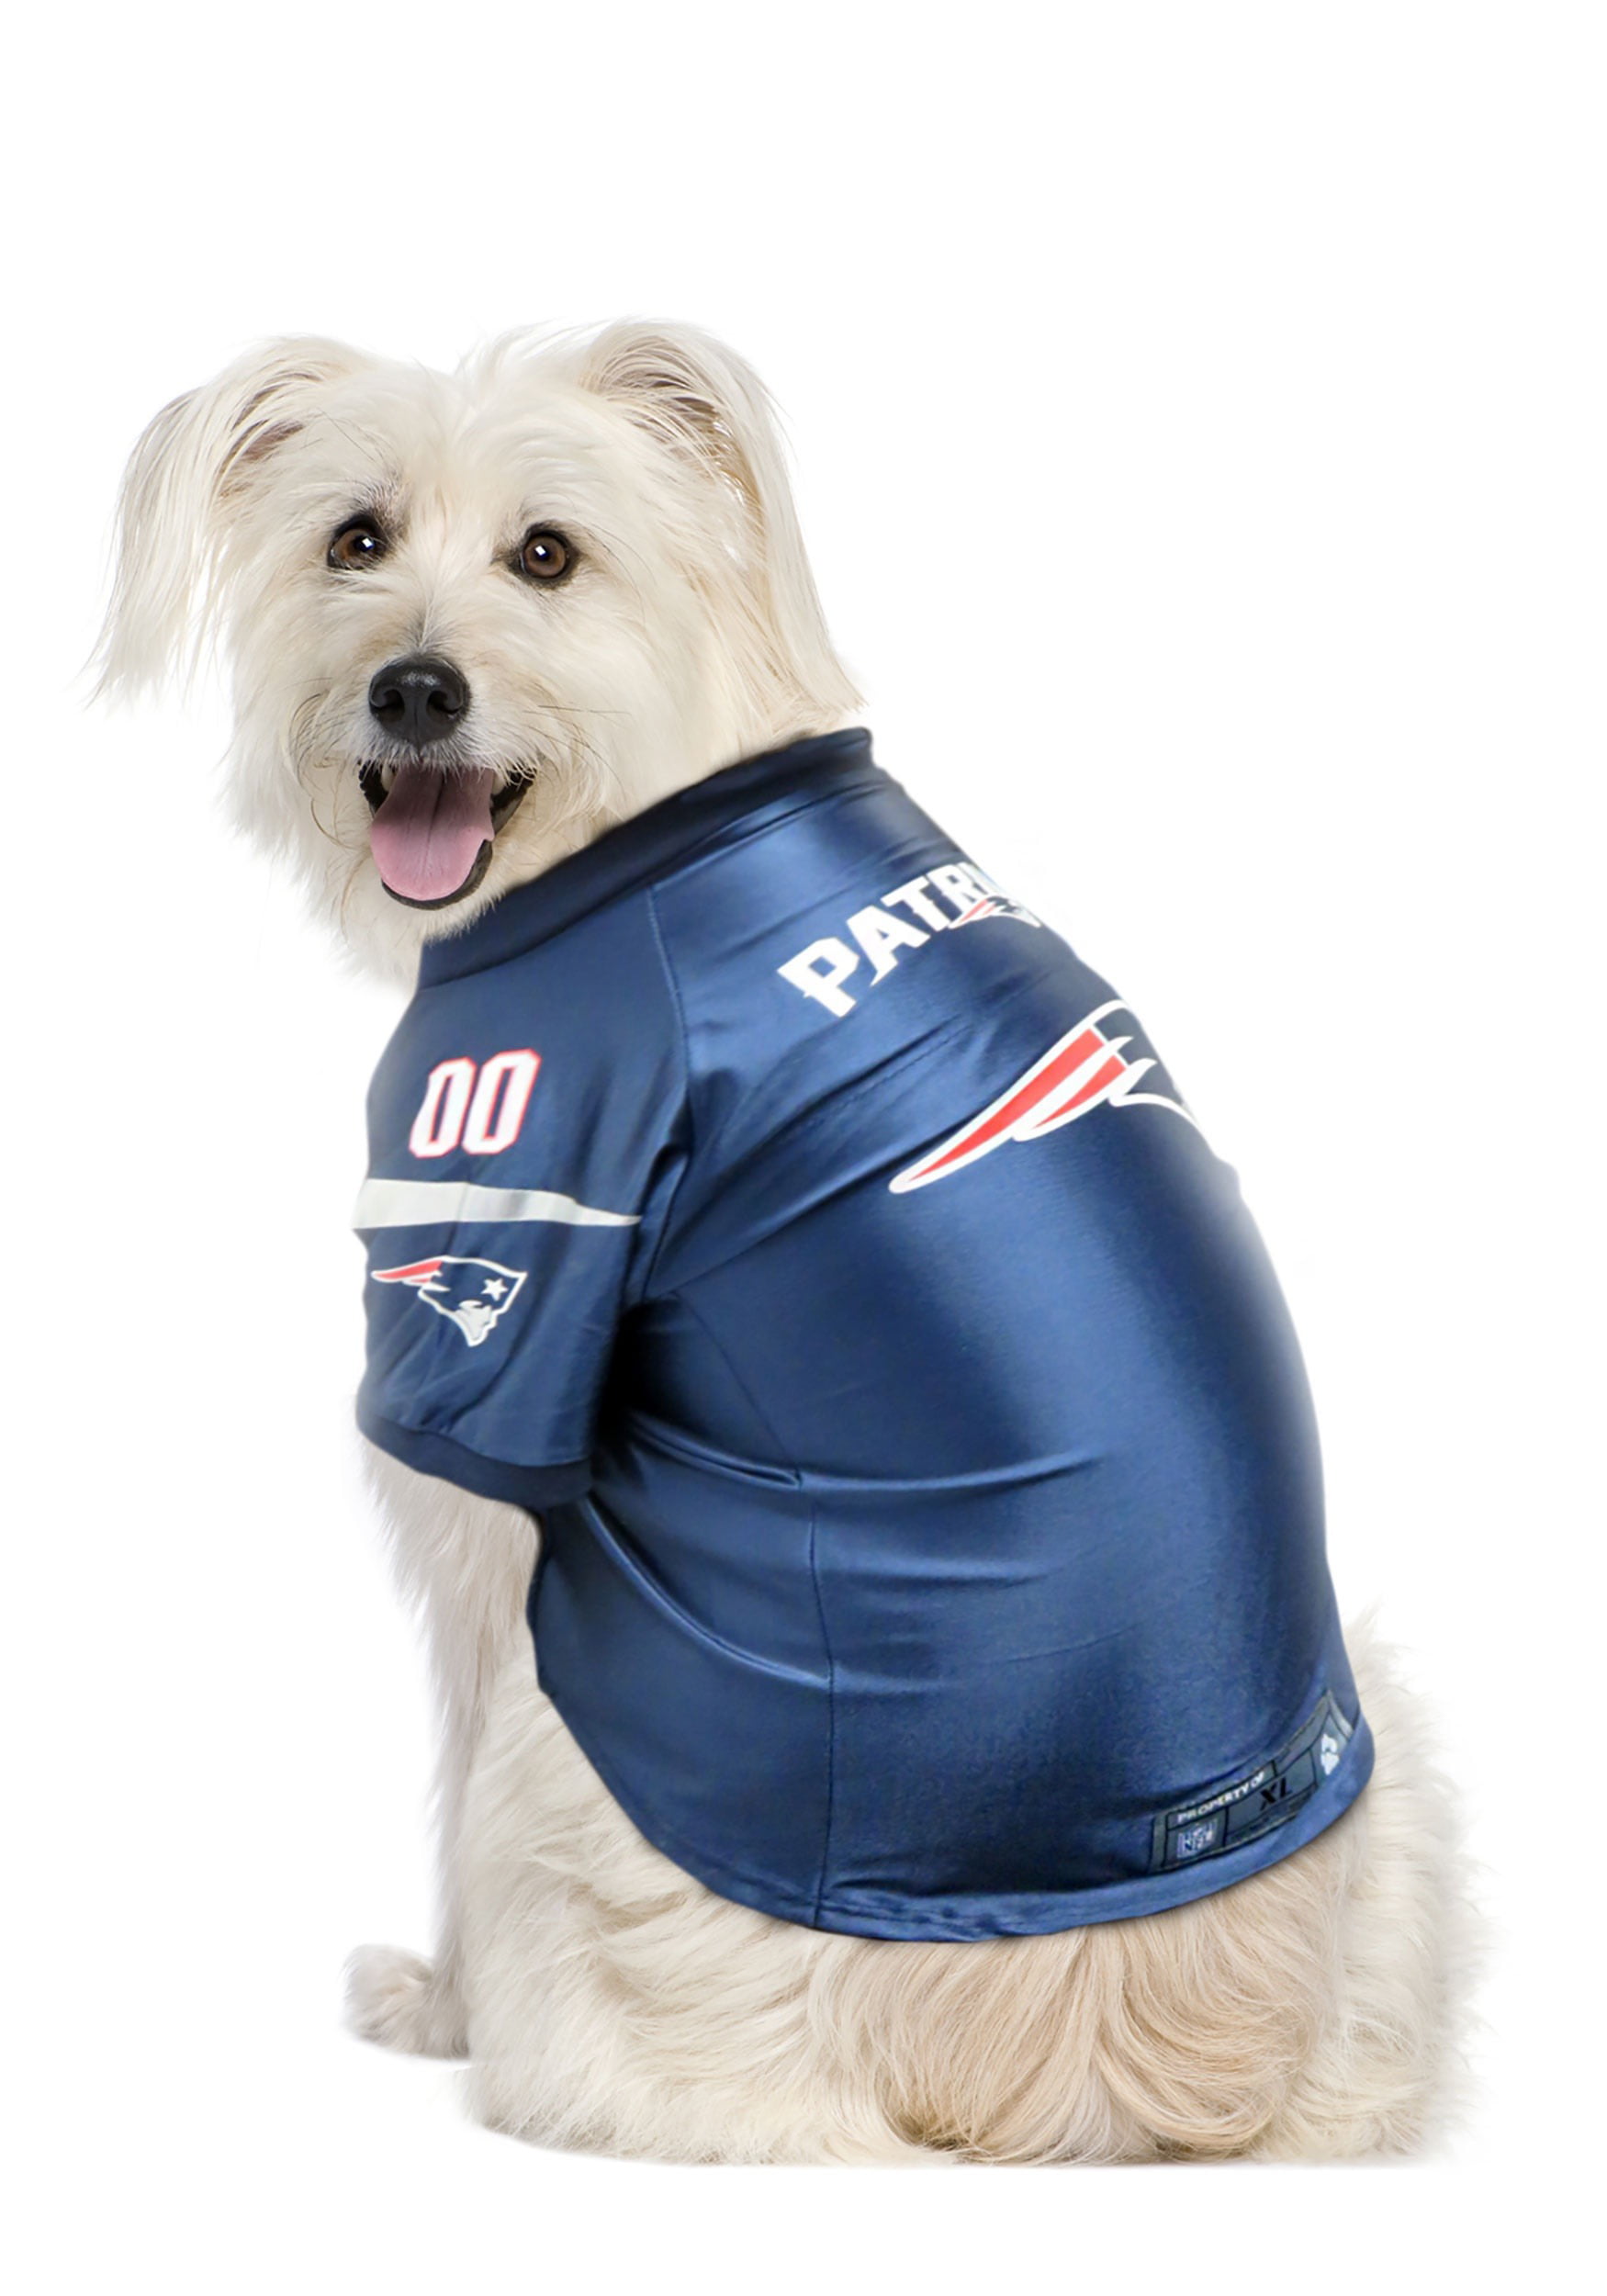 puppy patriots jersey